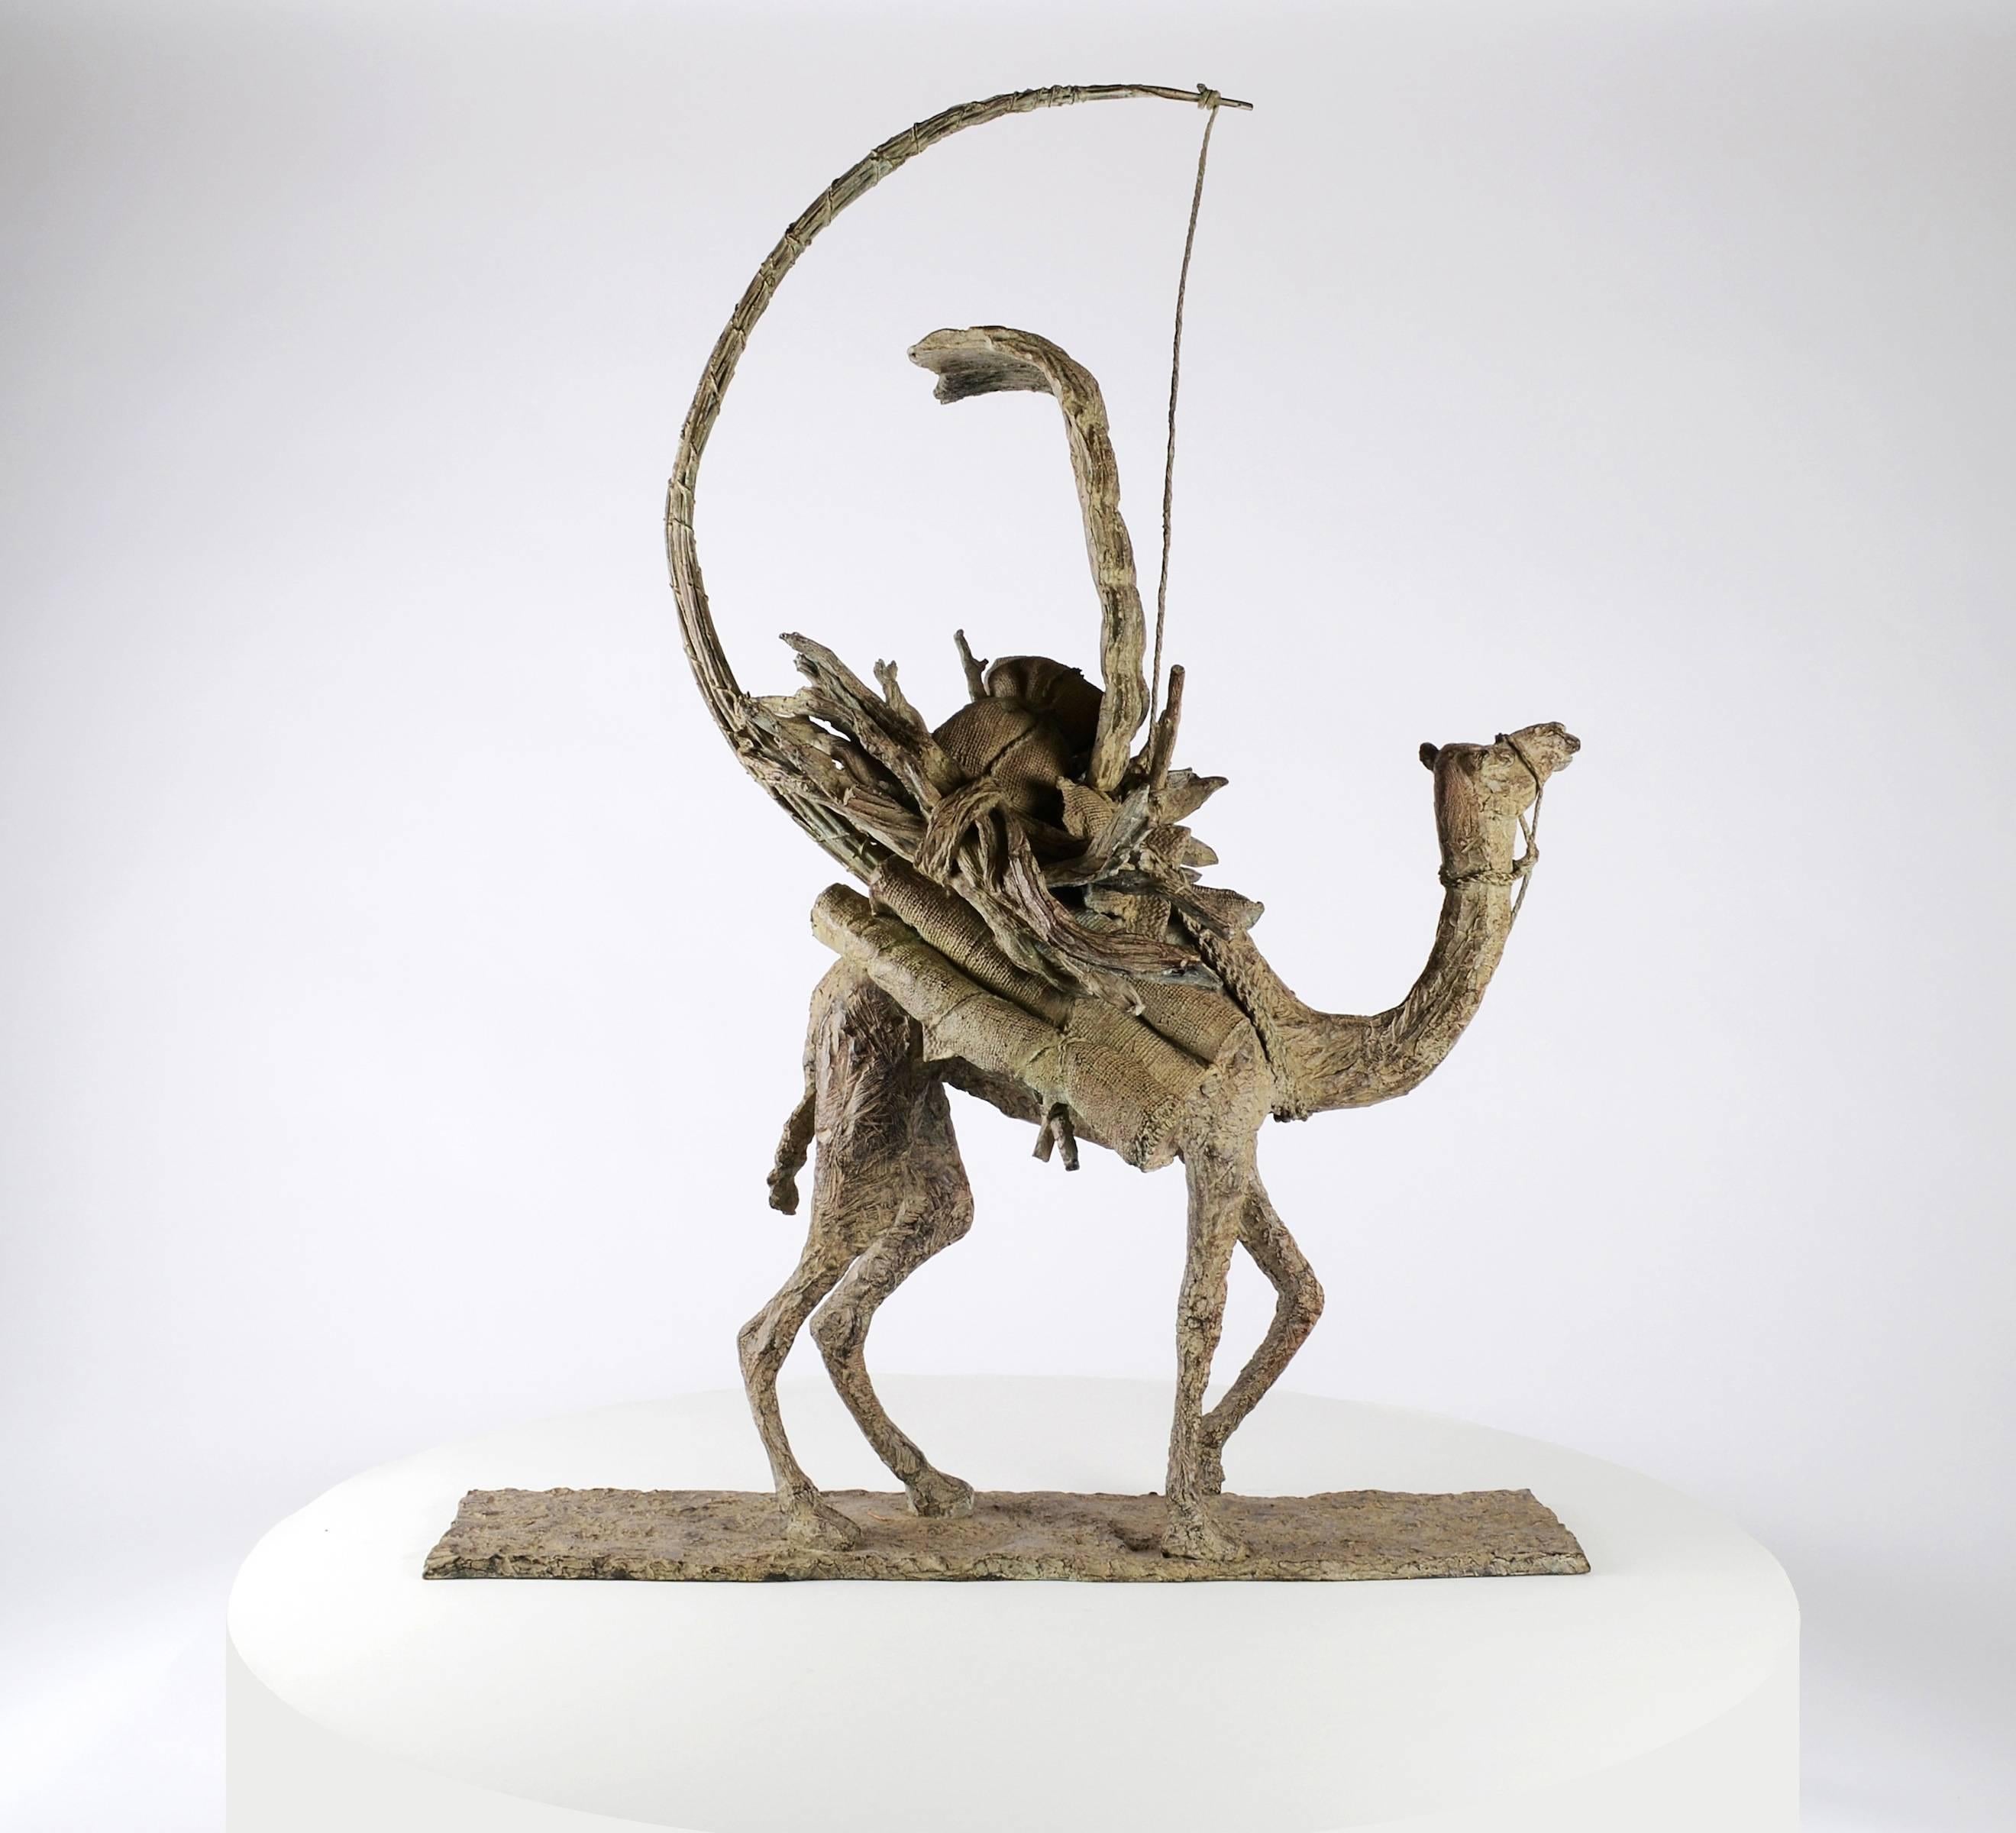 Marine de Soos Figurative Sculpture - The Vessel of the Desert by M. de Soos -  Animal Bronze Sculpture of a camel